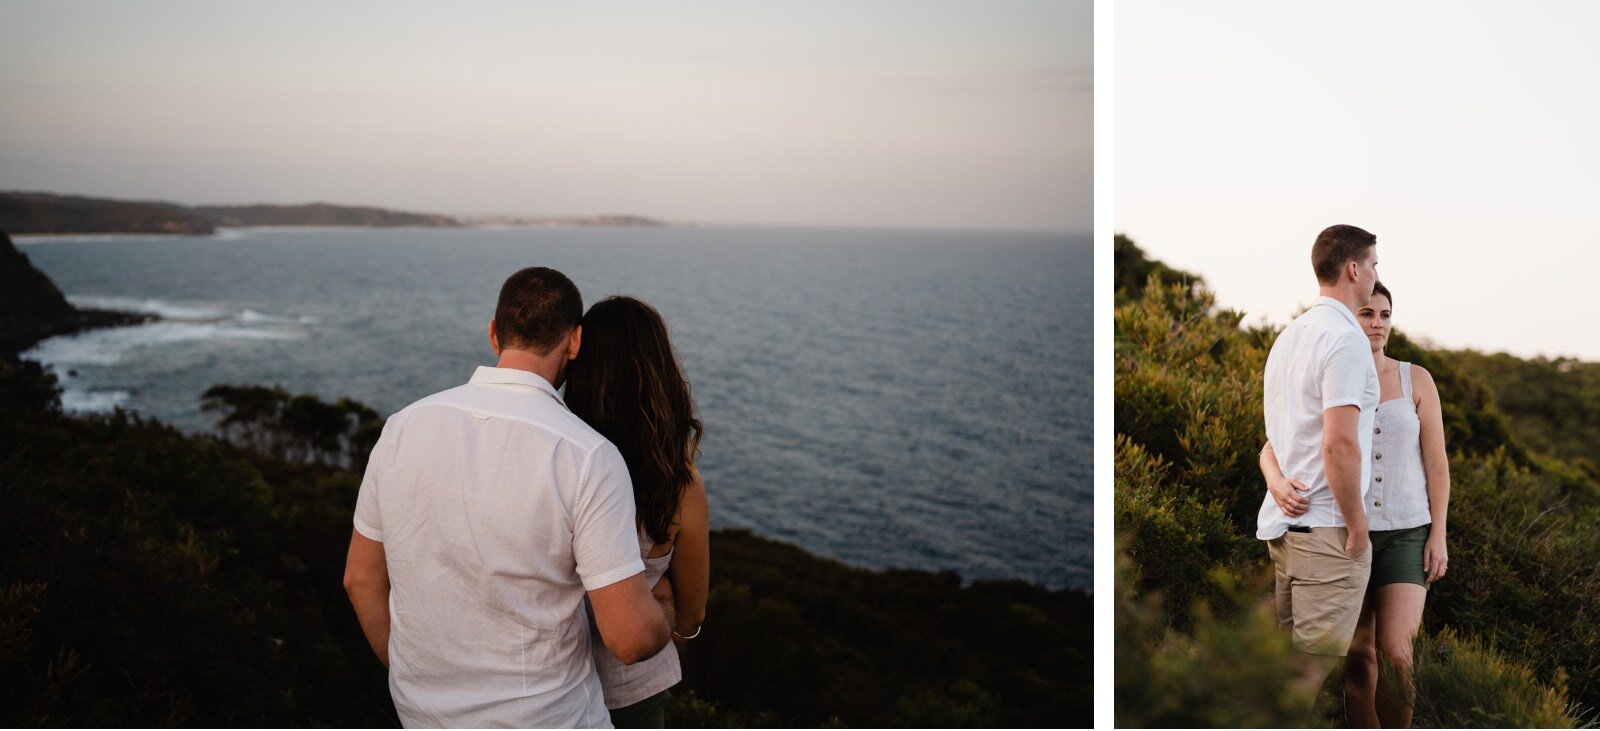 newcastle-engagement-shoot-couple-redhead-beach-35.jpg